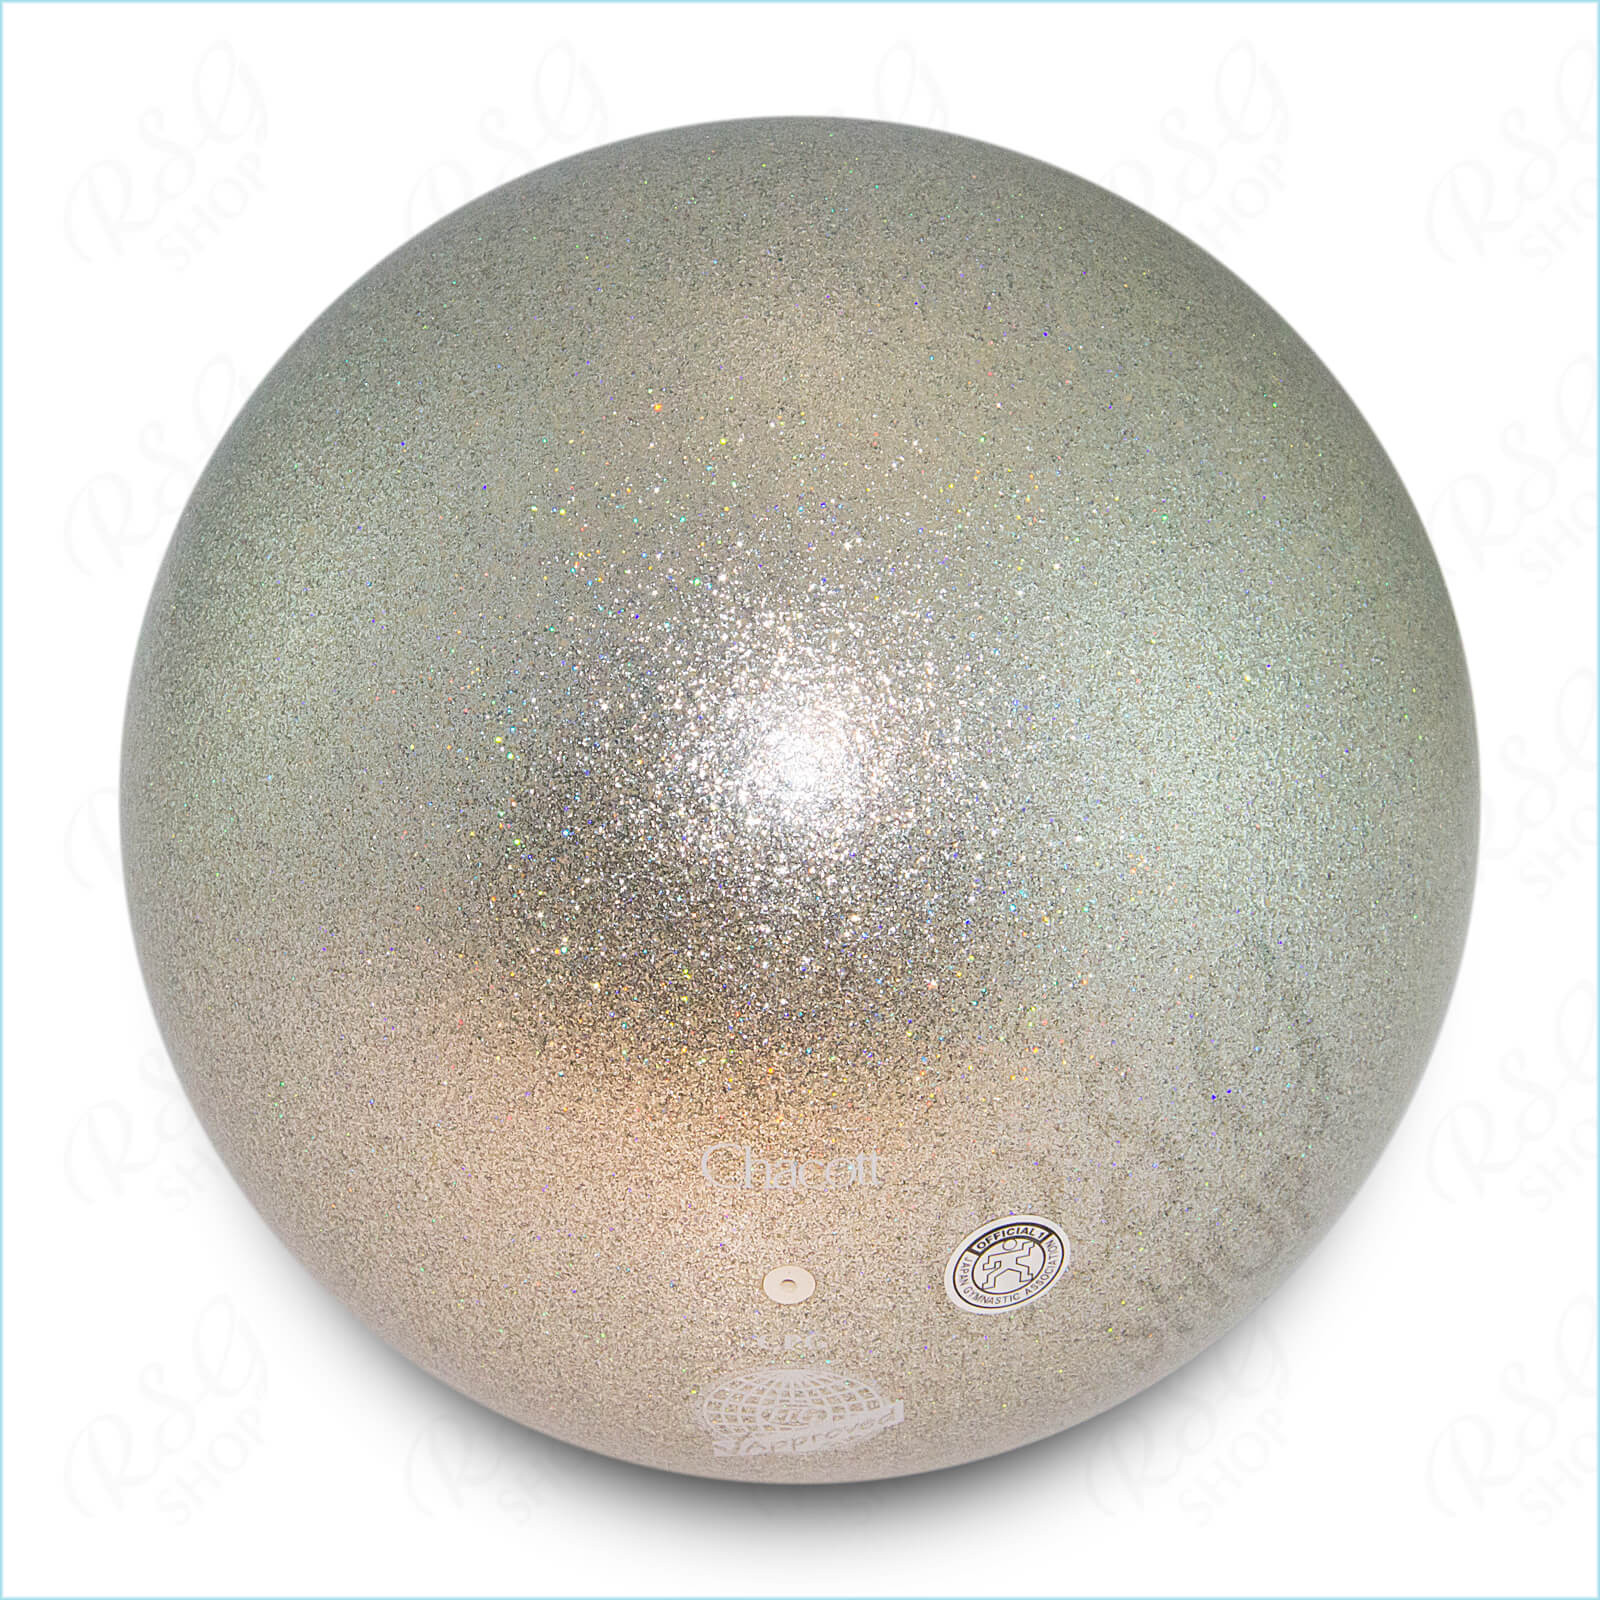 Мяч 18,5 см Chacott Jewelry цвет Серебряный (Silver) Артикул 598